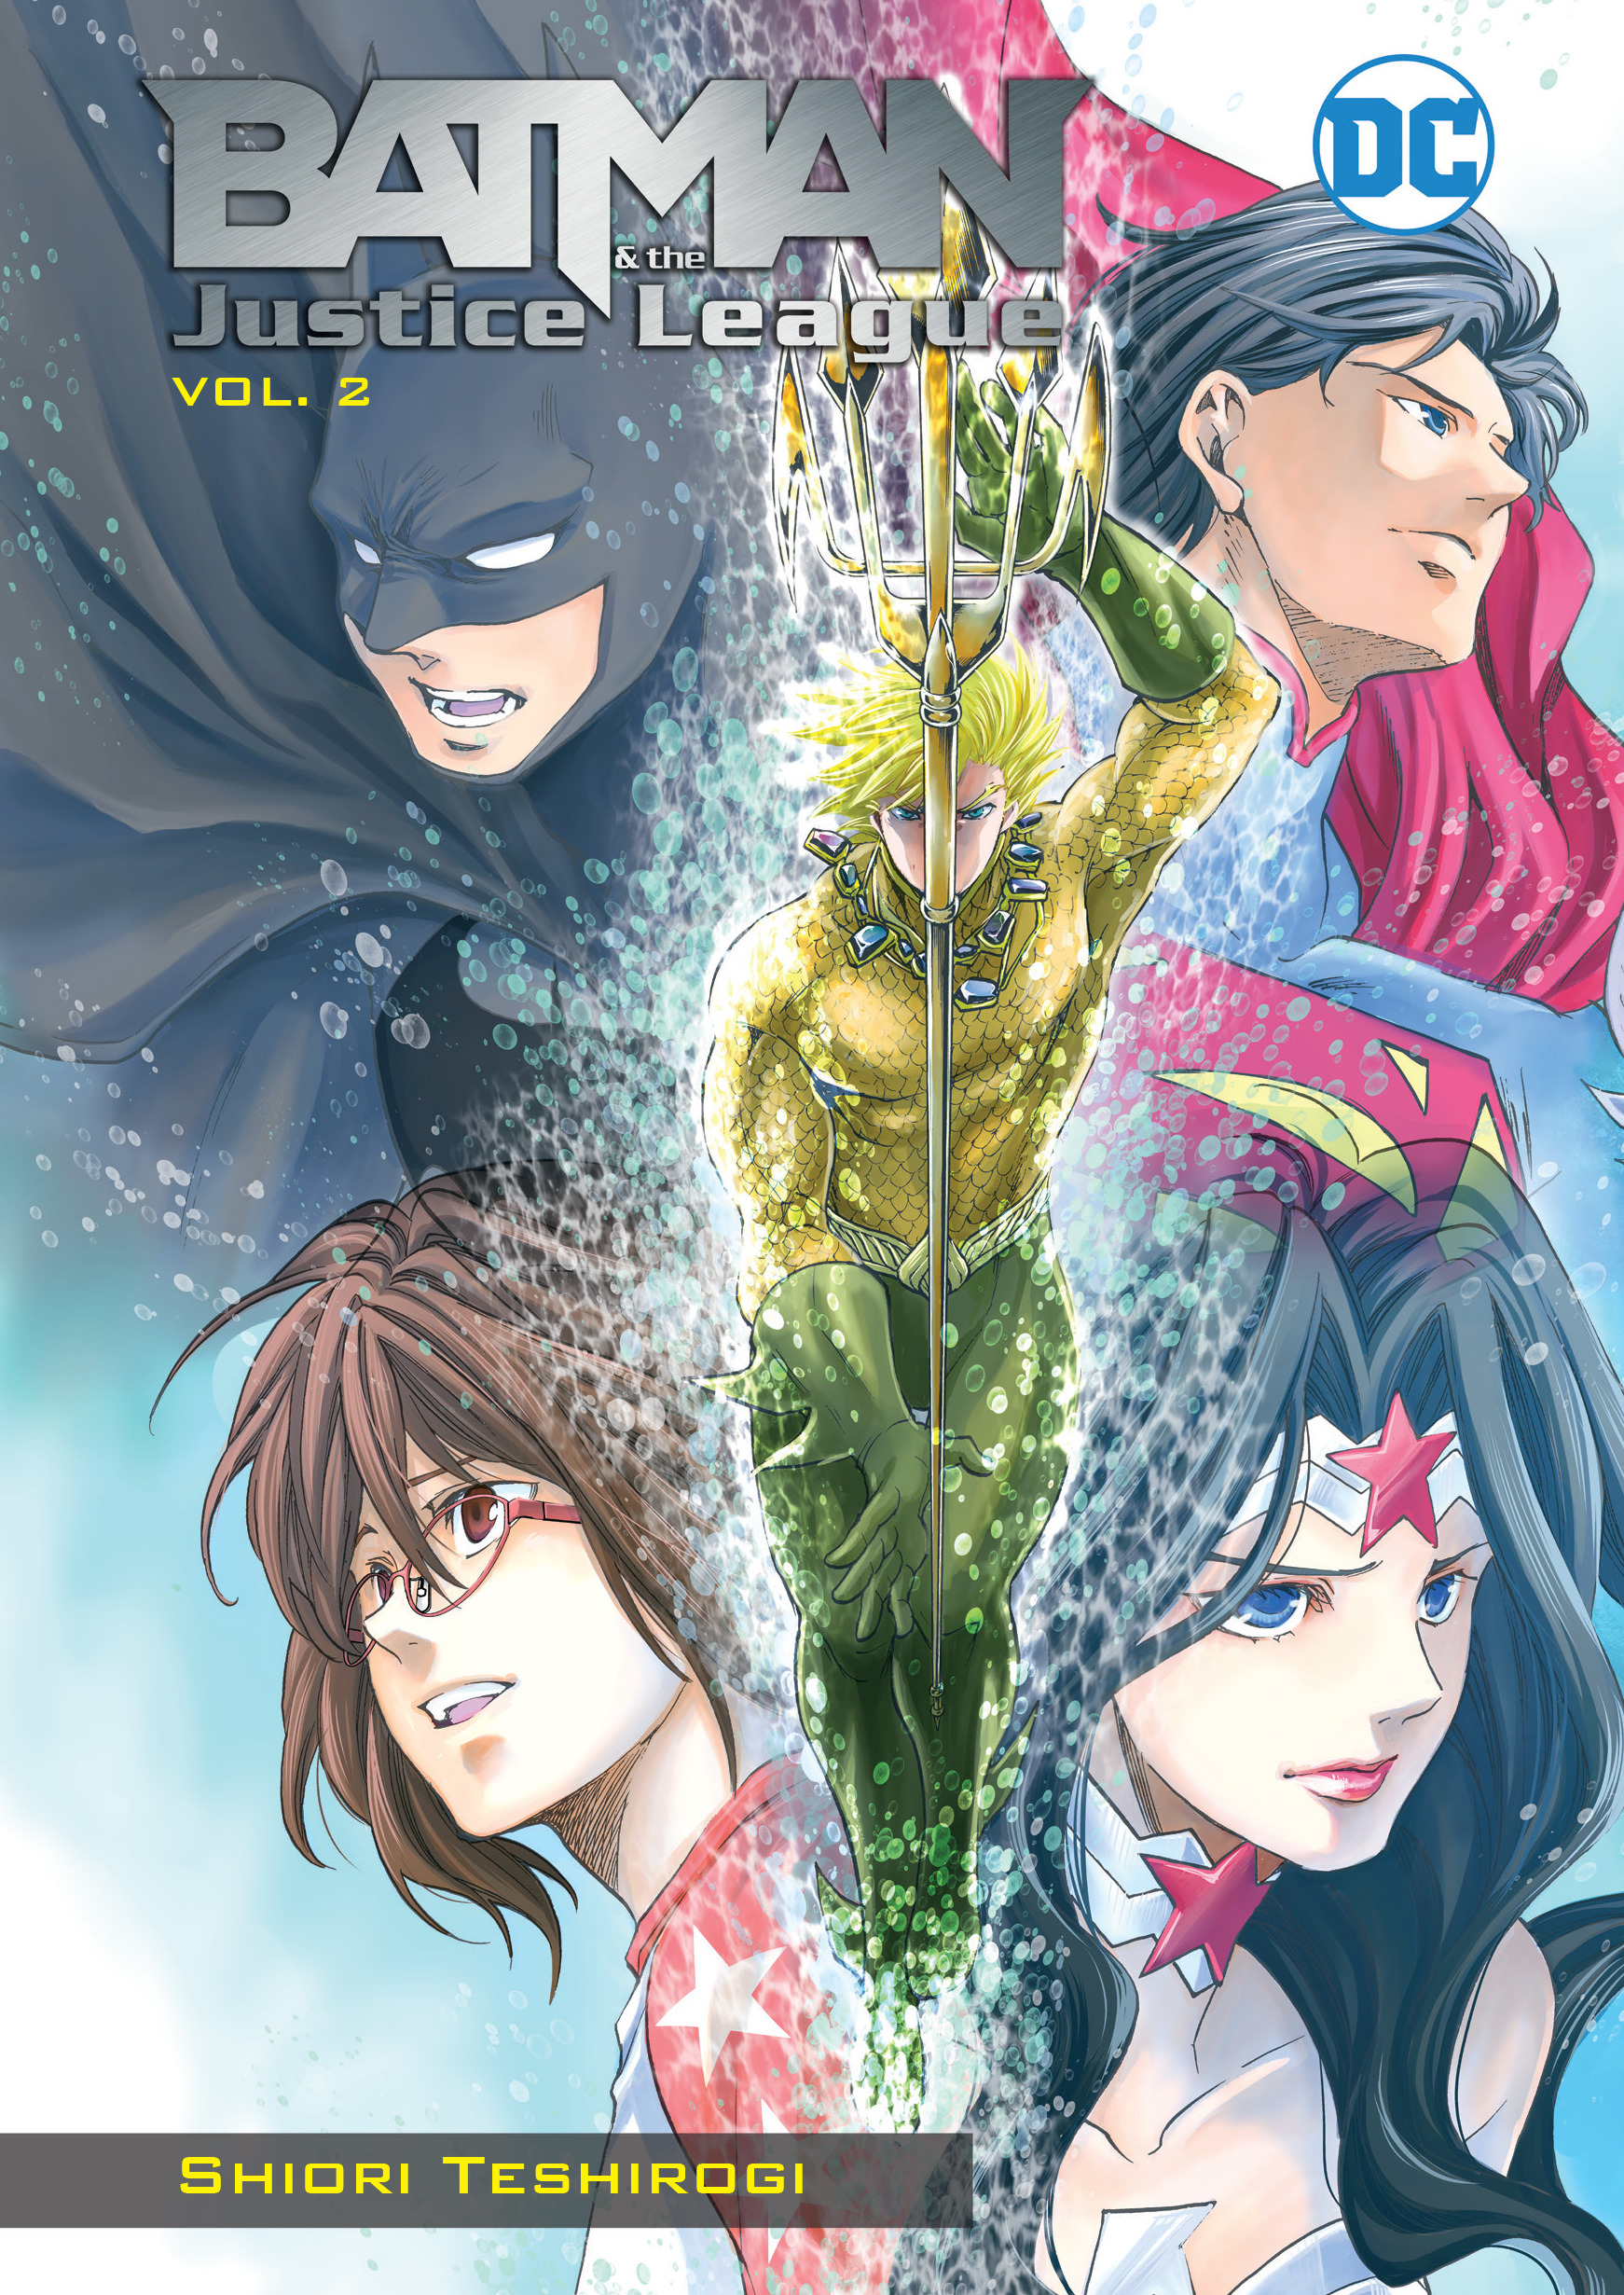 Batman & the Justice League Manga Manga Volume 2